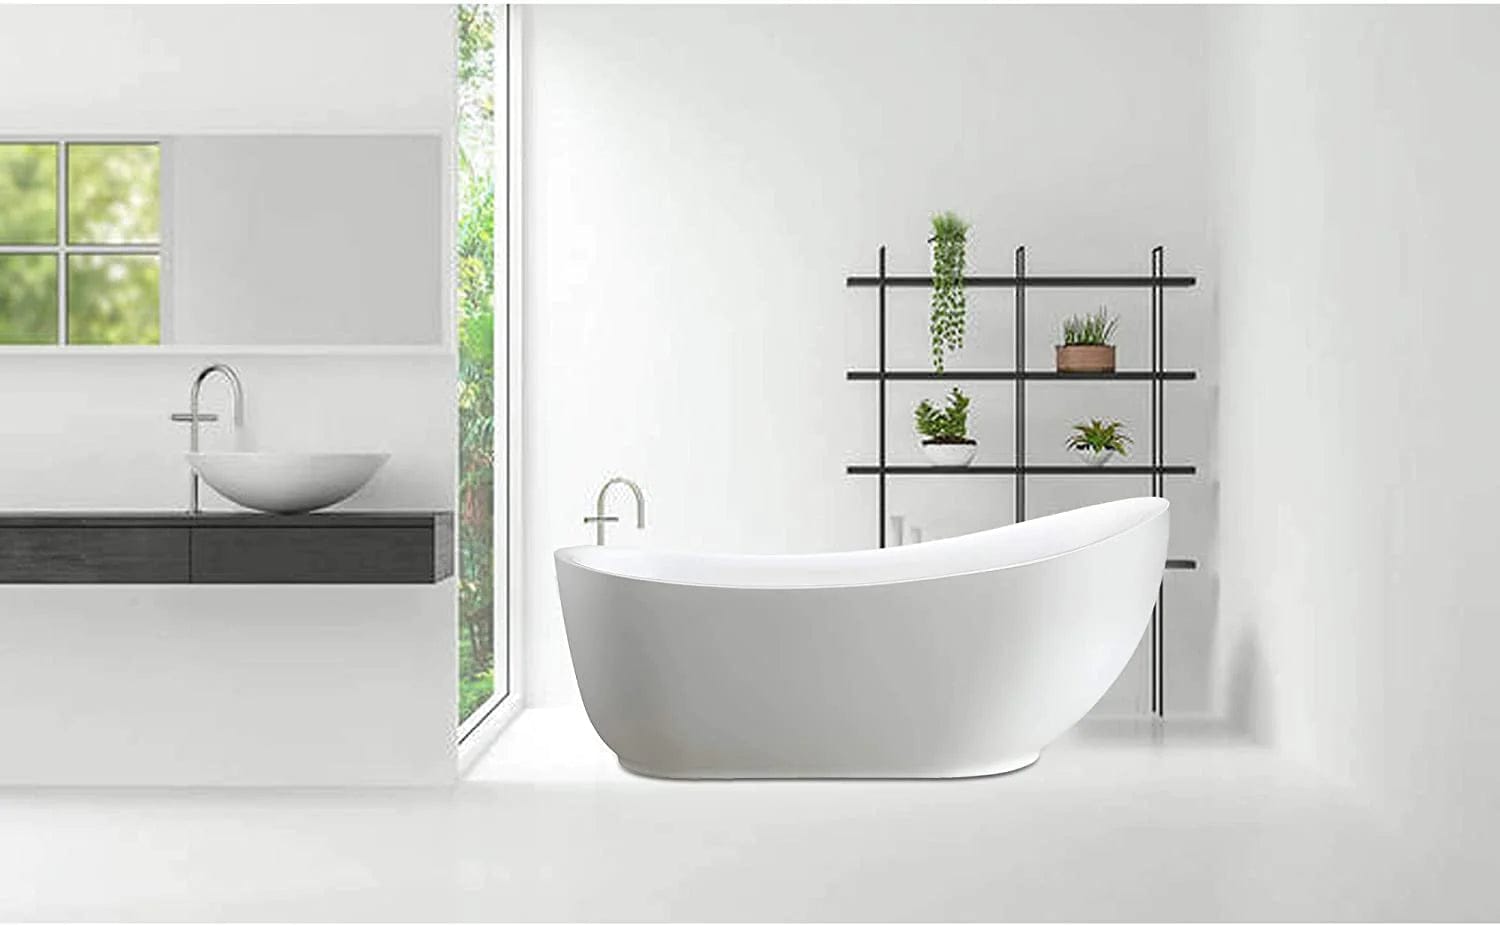 71x35  in. Freestanding Acrylic Bathtub - Decohub Home